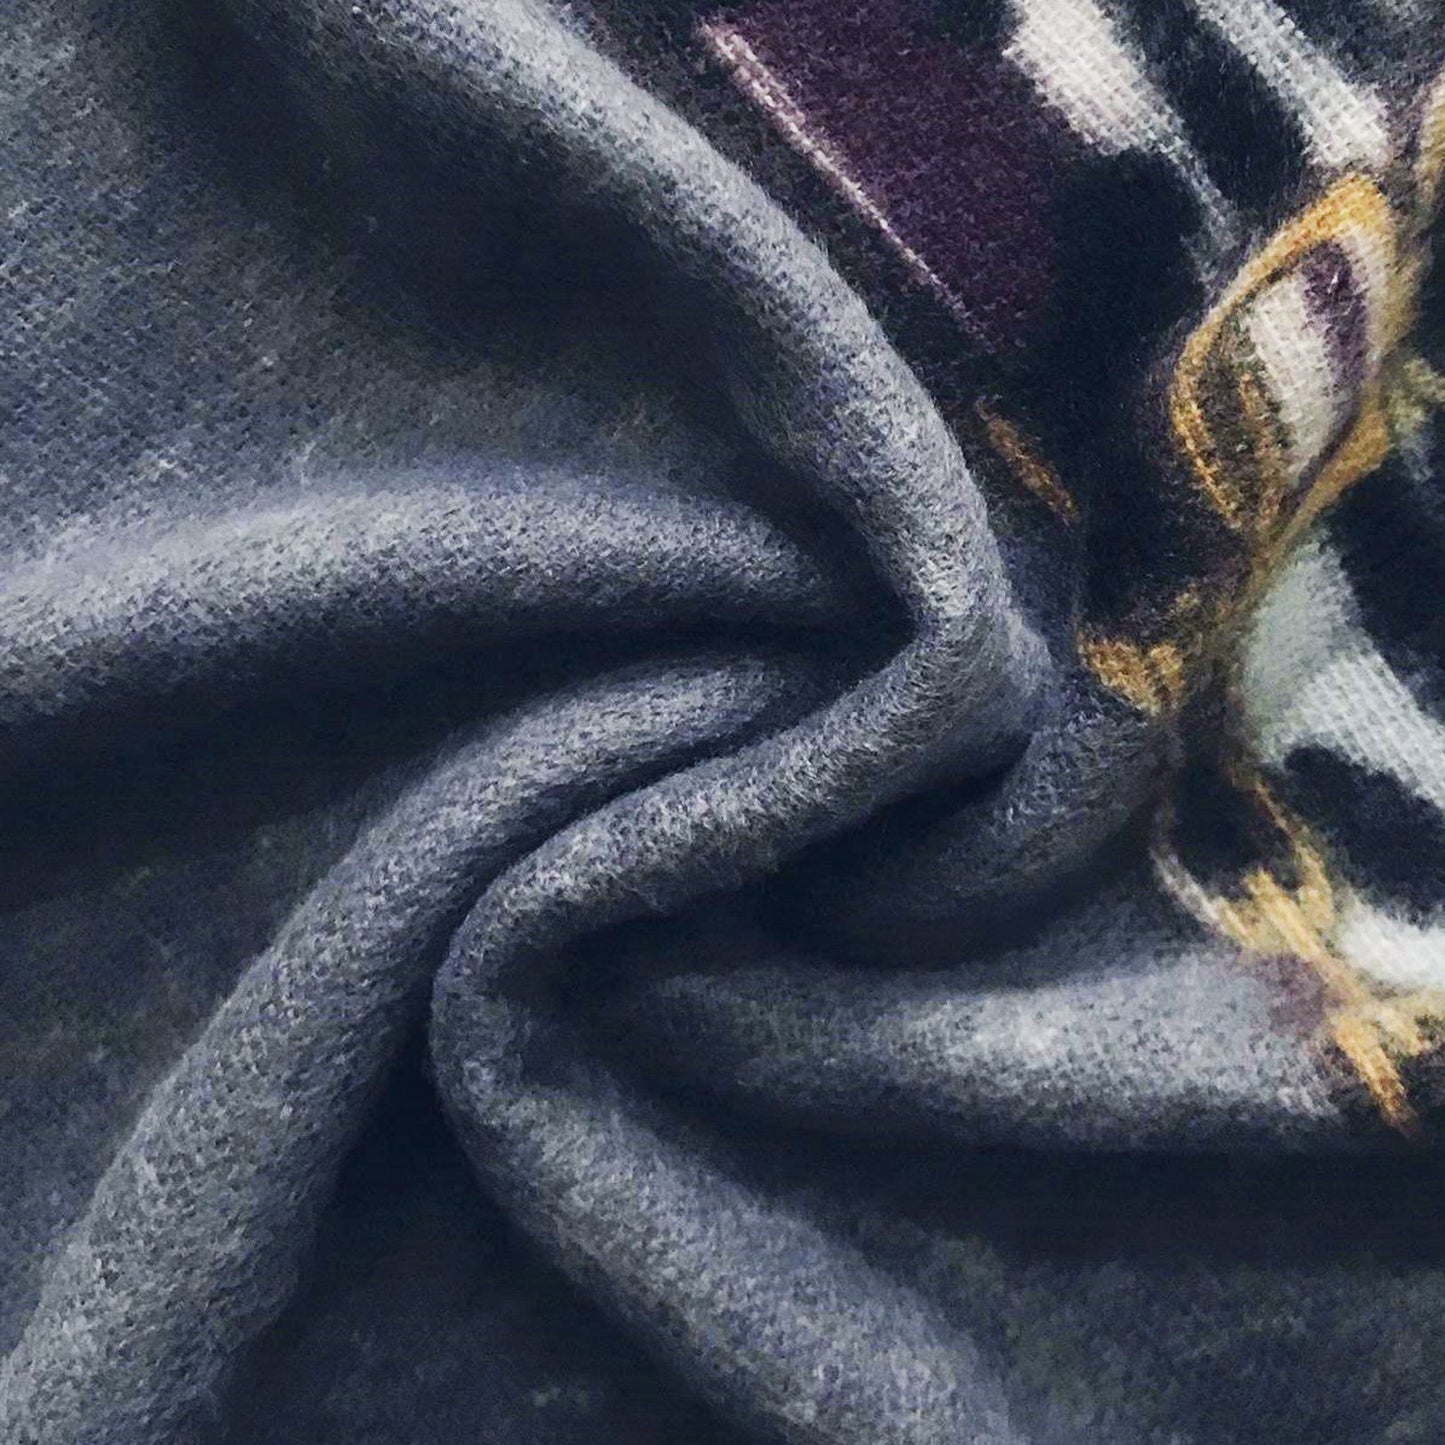 Bufanda de lana estampada, 70 cm x 190 cm, gris